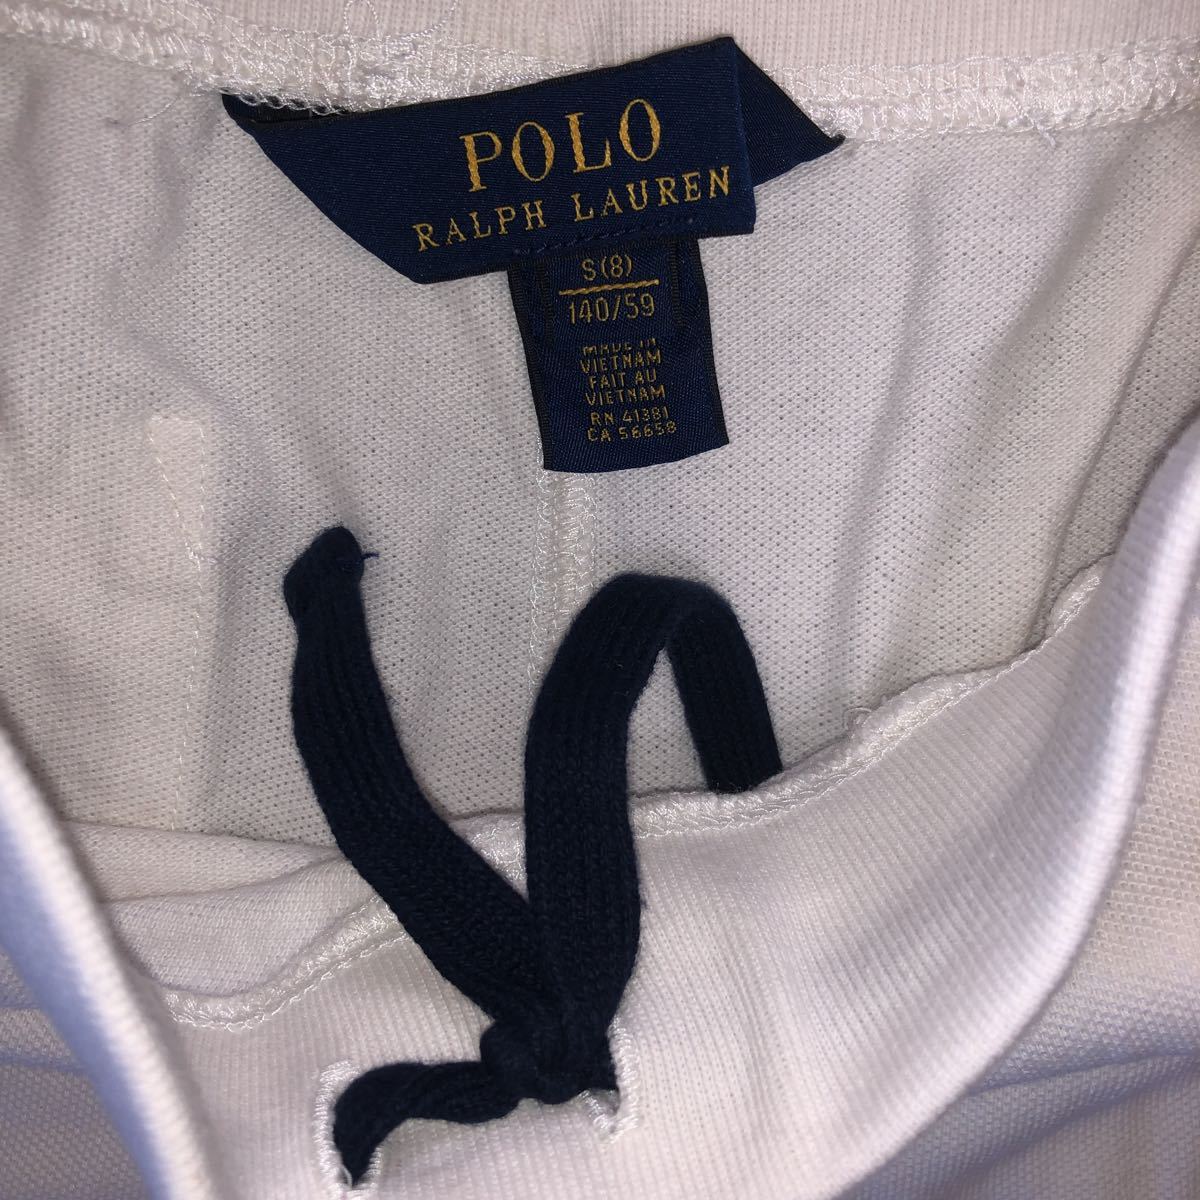 [RALPH LAUREN/ Ralph Lauren ] шорты размер S(8)/140. большой po колено б/у "теплый" белый 